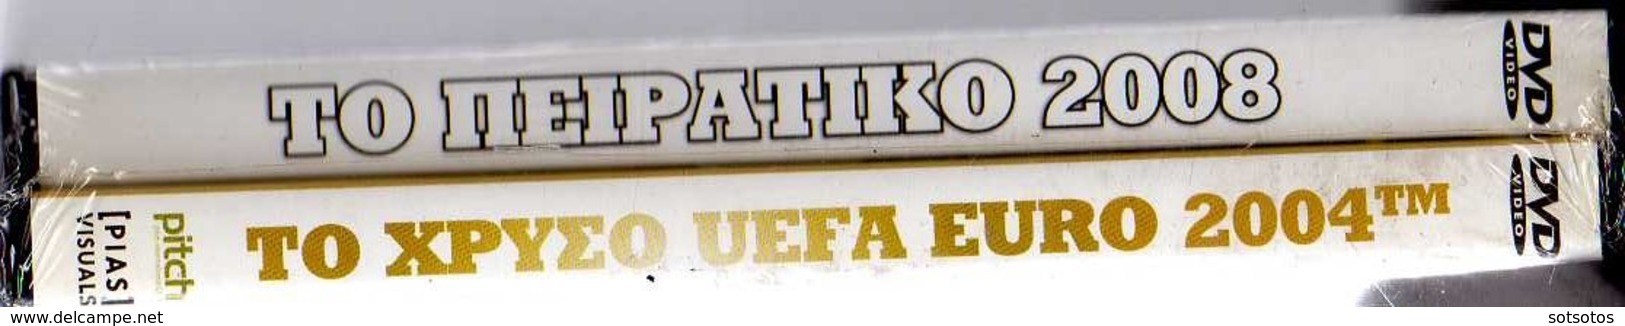 2 DVD's Of UEFA EURO 2004 And 2008 Unused In Original Unopened Packet - Sports